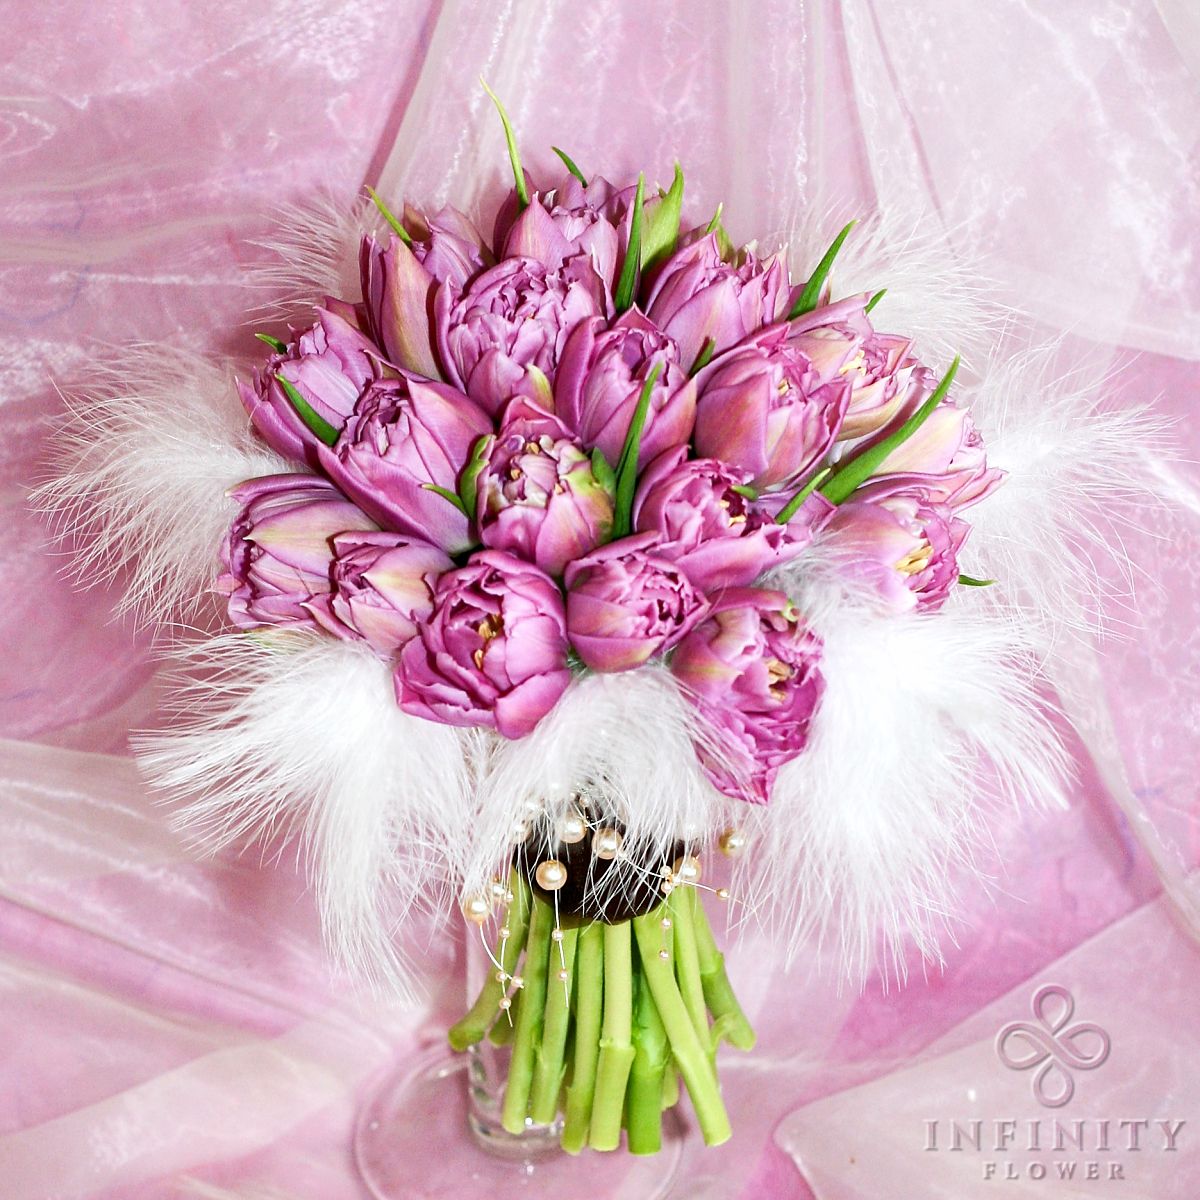 svatebni-kytice-praha-infinity-flower-06-tulipanyjpg.jpg